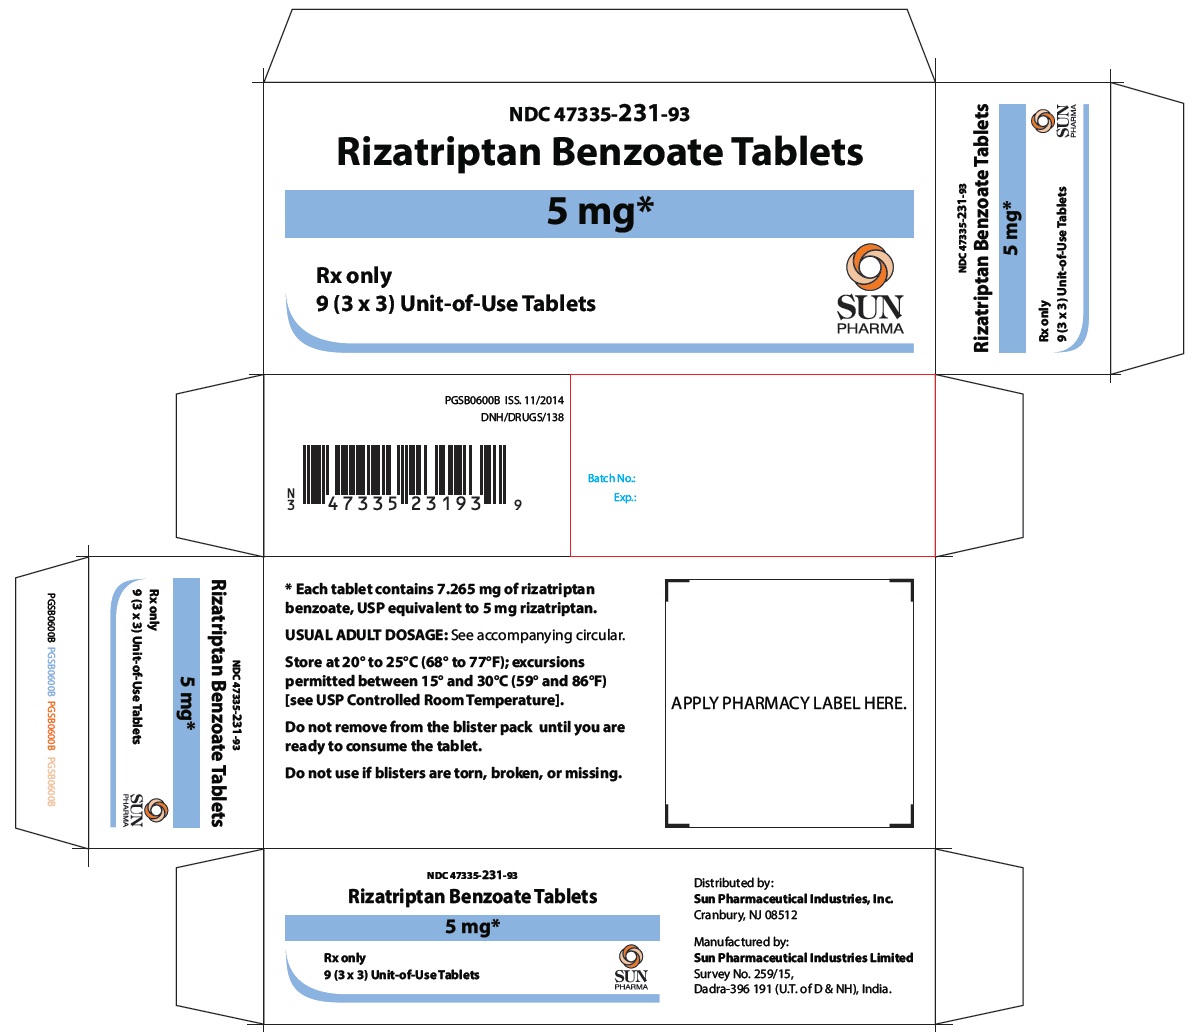 spl-rizatriptan-benzoate-label-1